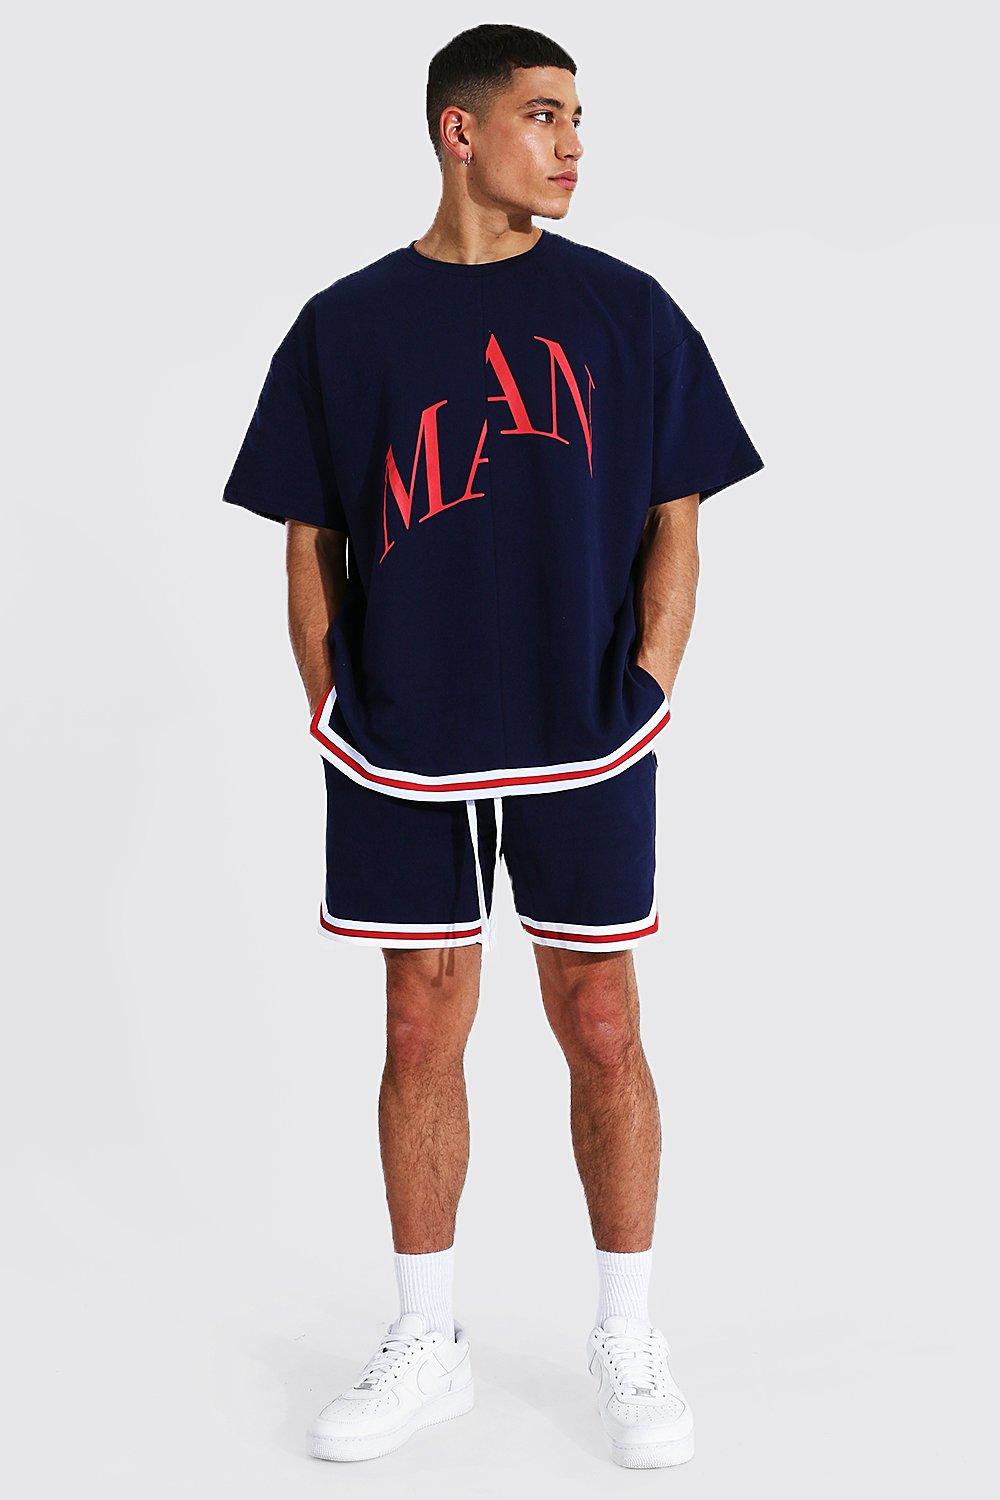 Oversized Man Tape T-Shirt and Basketball